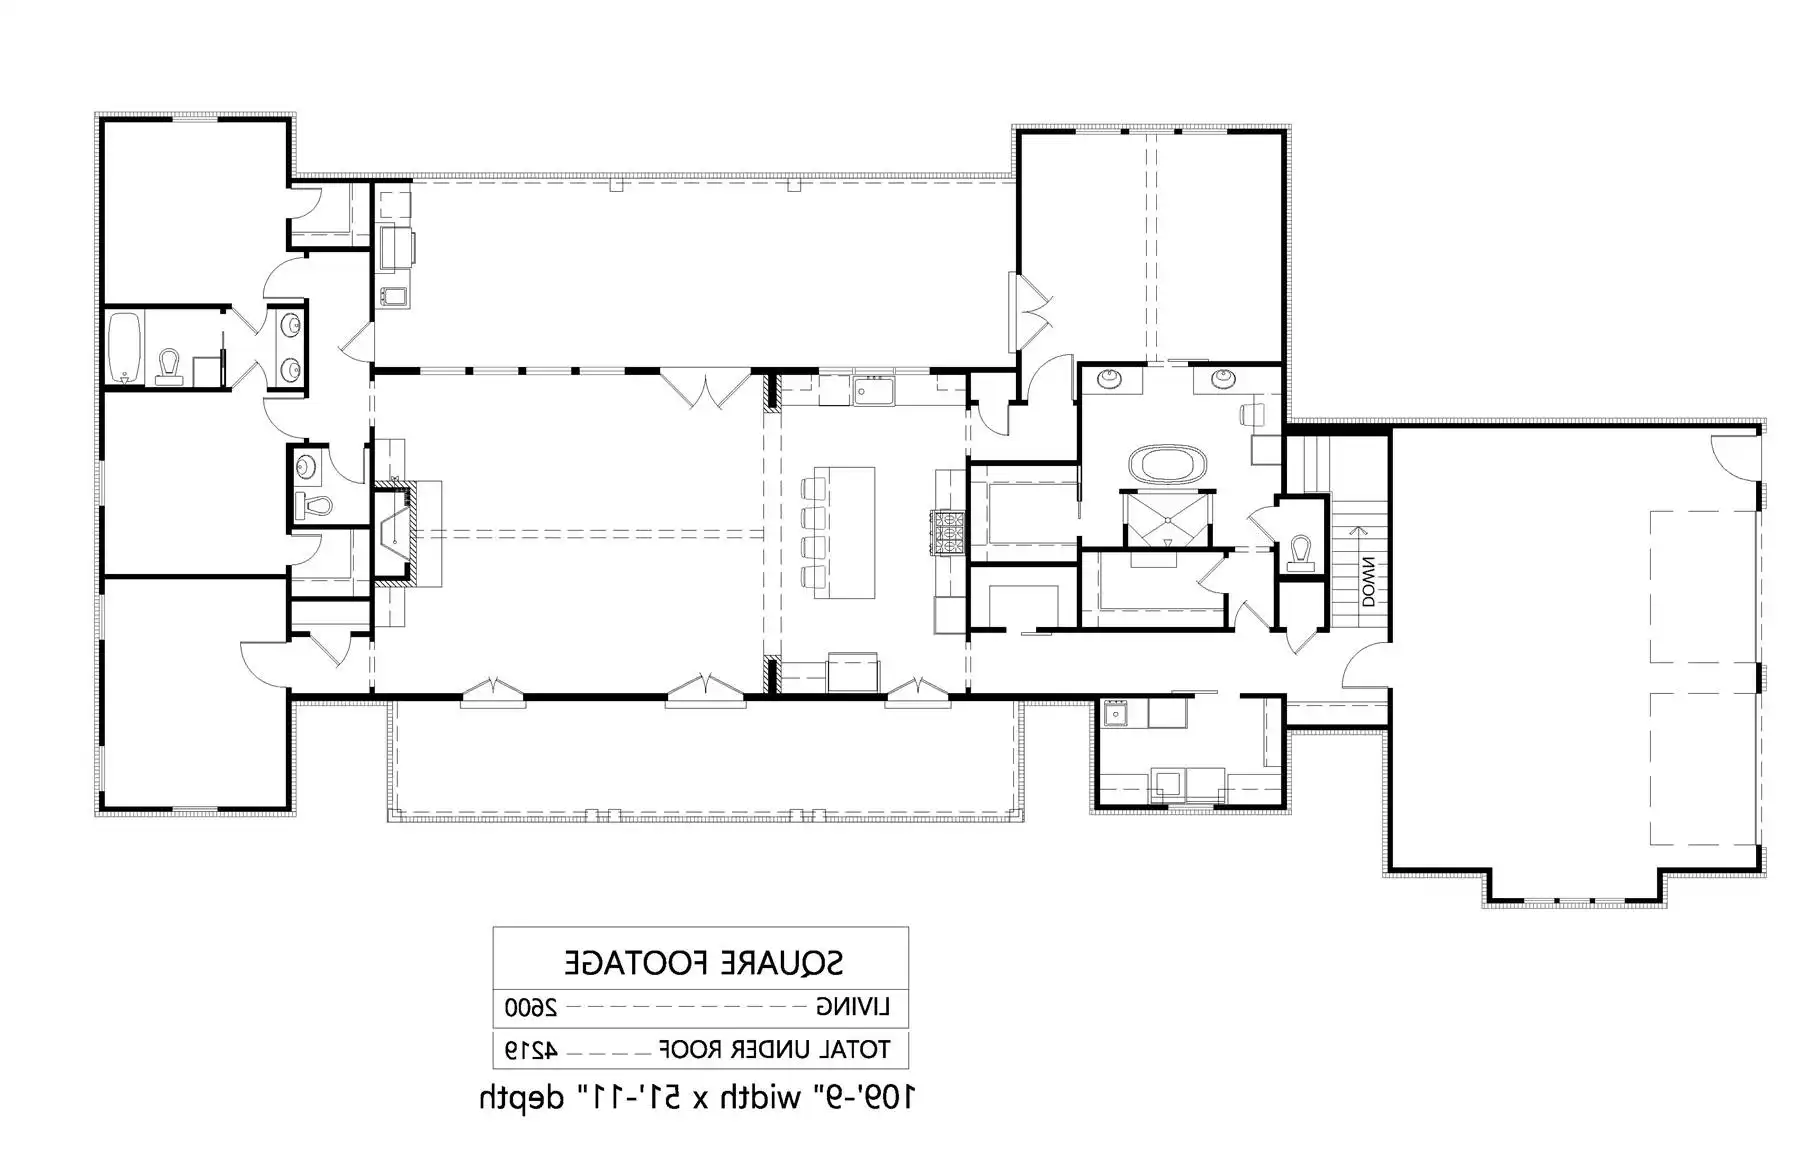 Basement Option Floor Plan